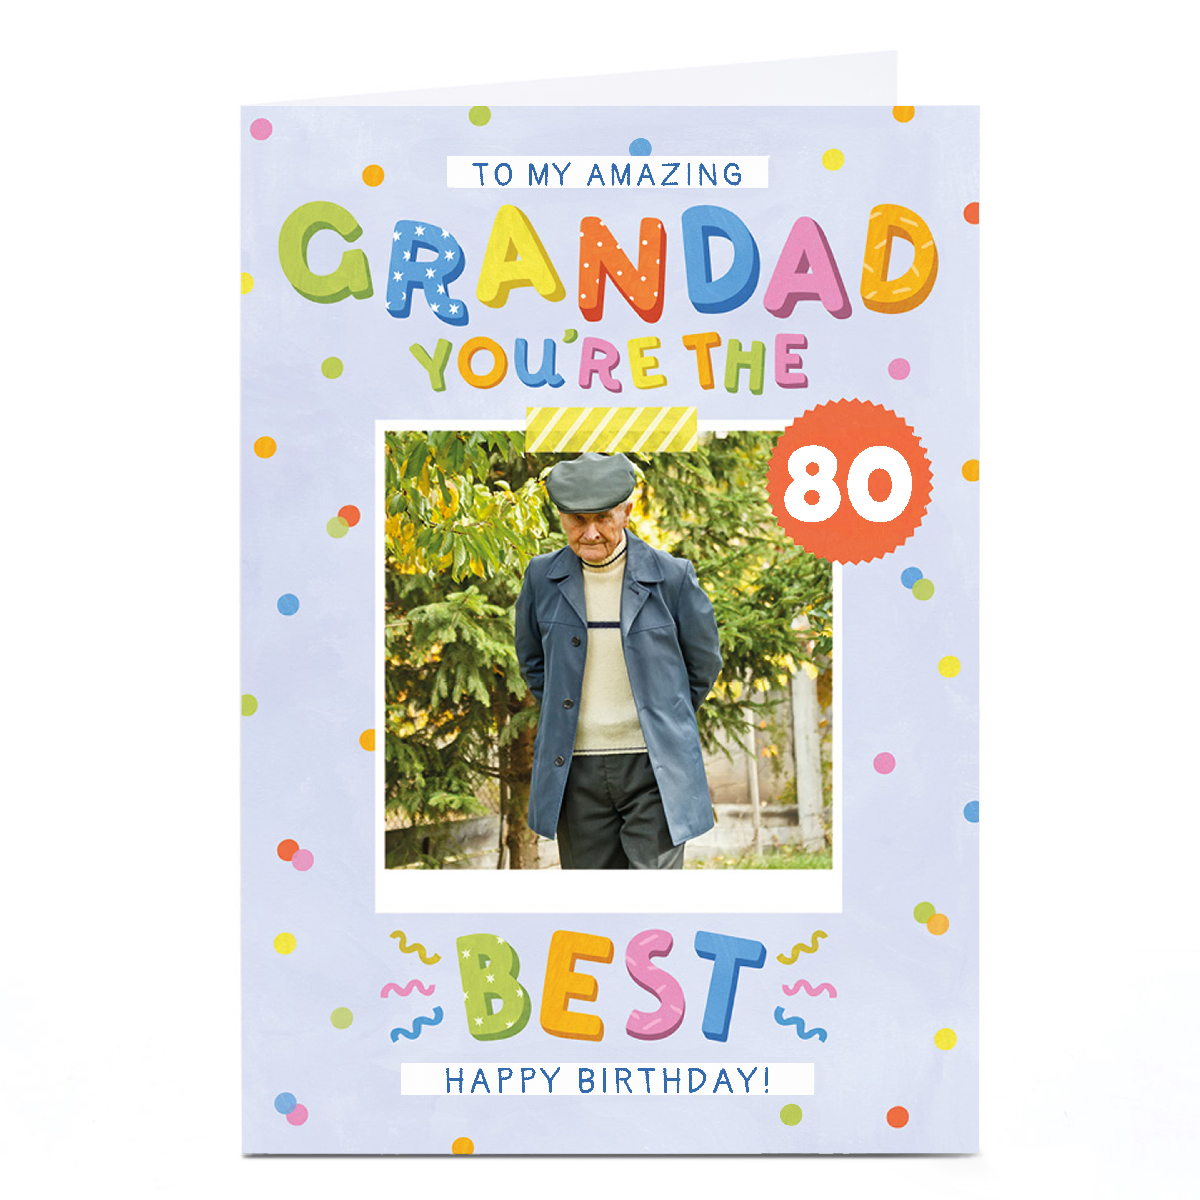 Photo Lemon & Sugar Birthday Card - You're the Best Grandad, Editable Age